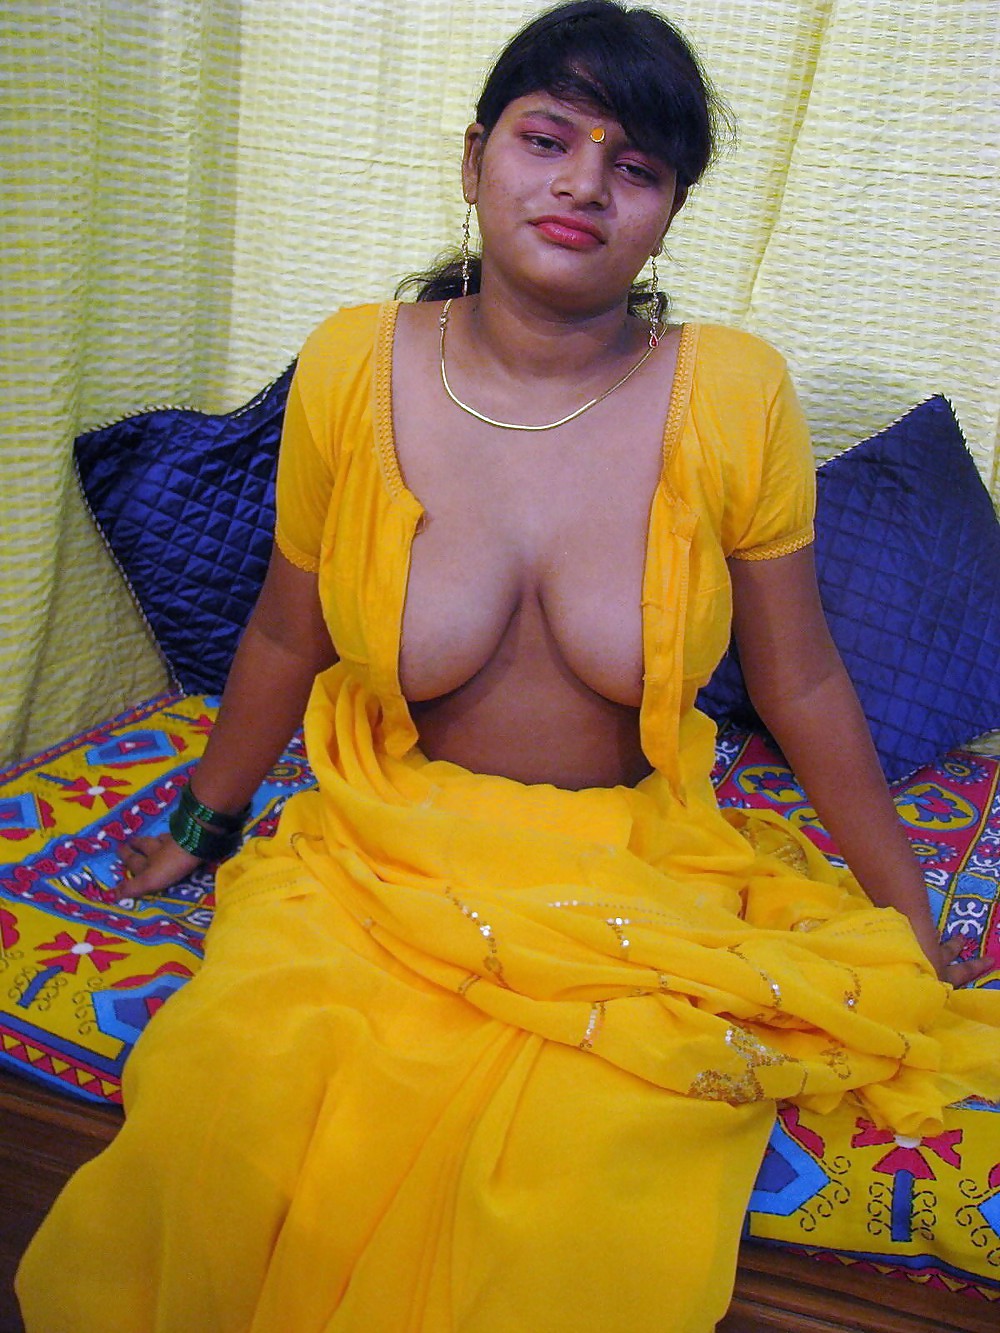 Desi Bala Chaud Et Sexy - Hardcore Indien #24976438